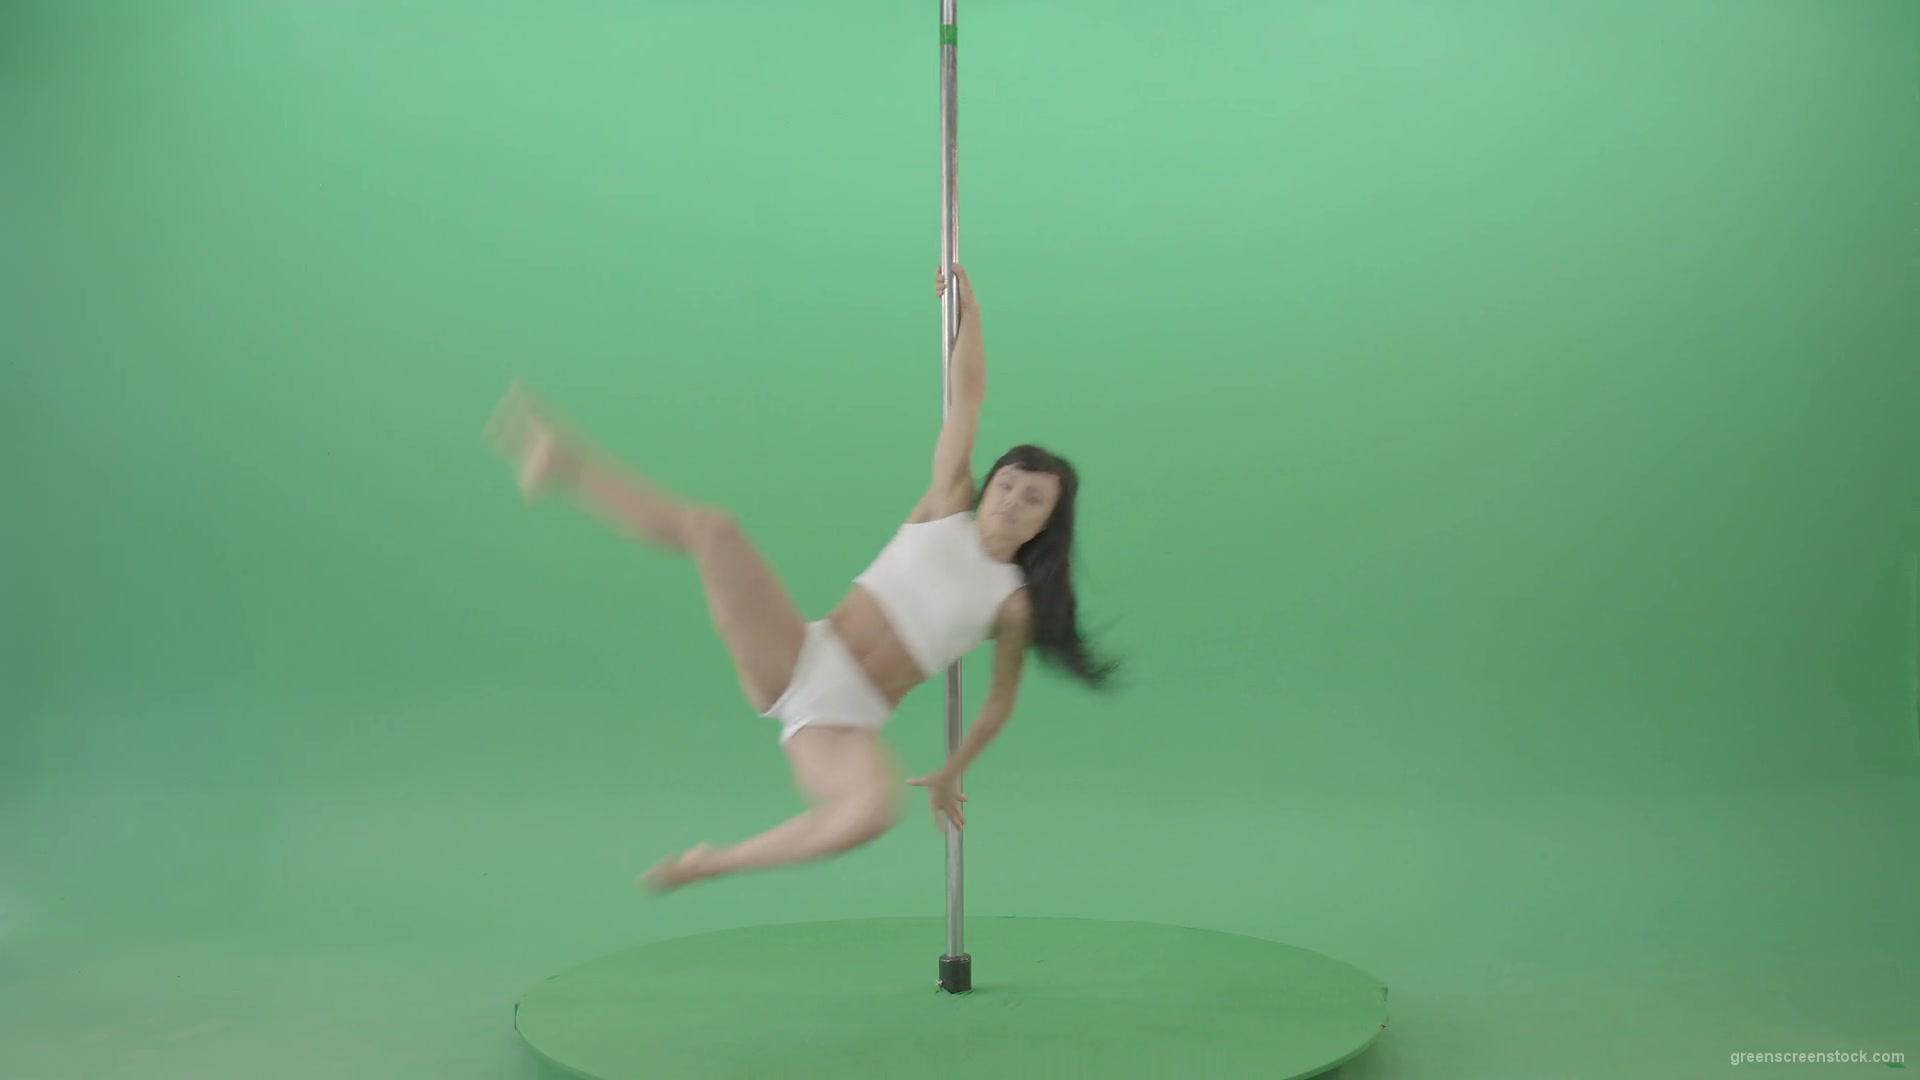 Acrobatic-gymnastics-making-spin-element-on-Pole-Pilon-on-green-screen-4K-Video-Footage-1920_004 Green Screen Stock